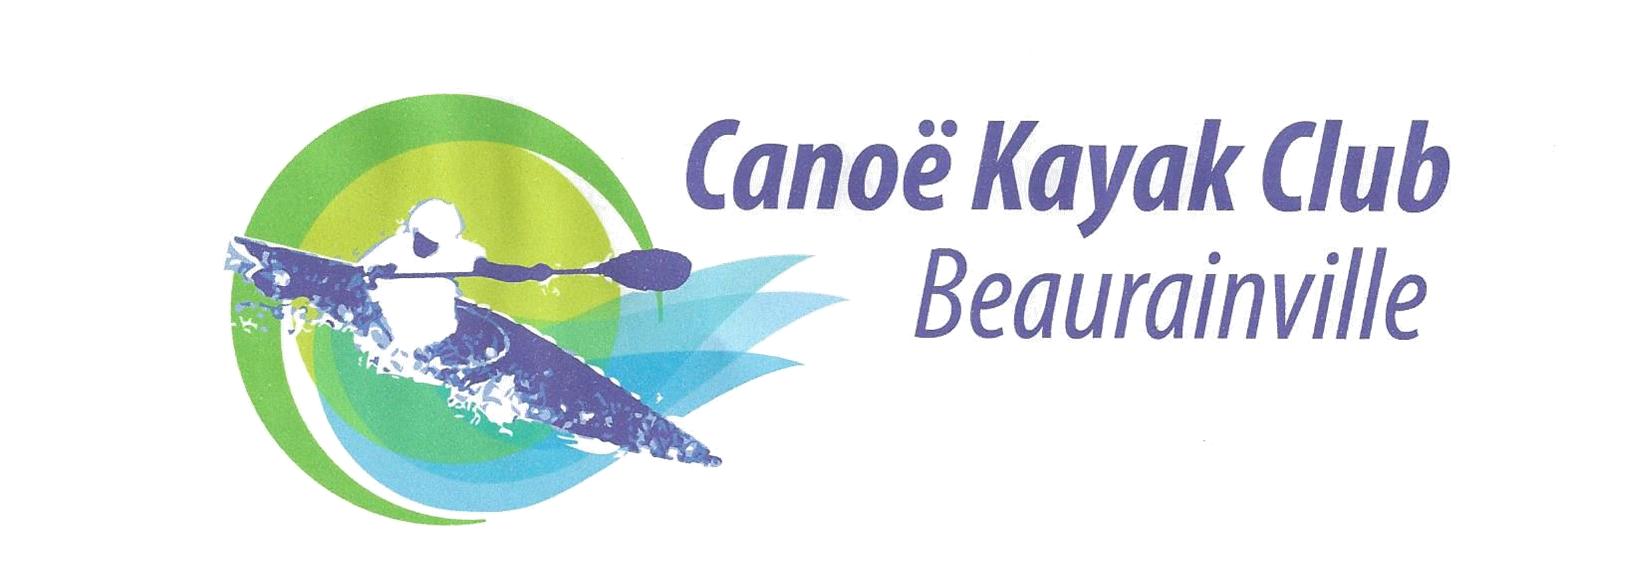 Club Canoe Kayak Beaurainvillois